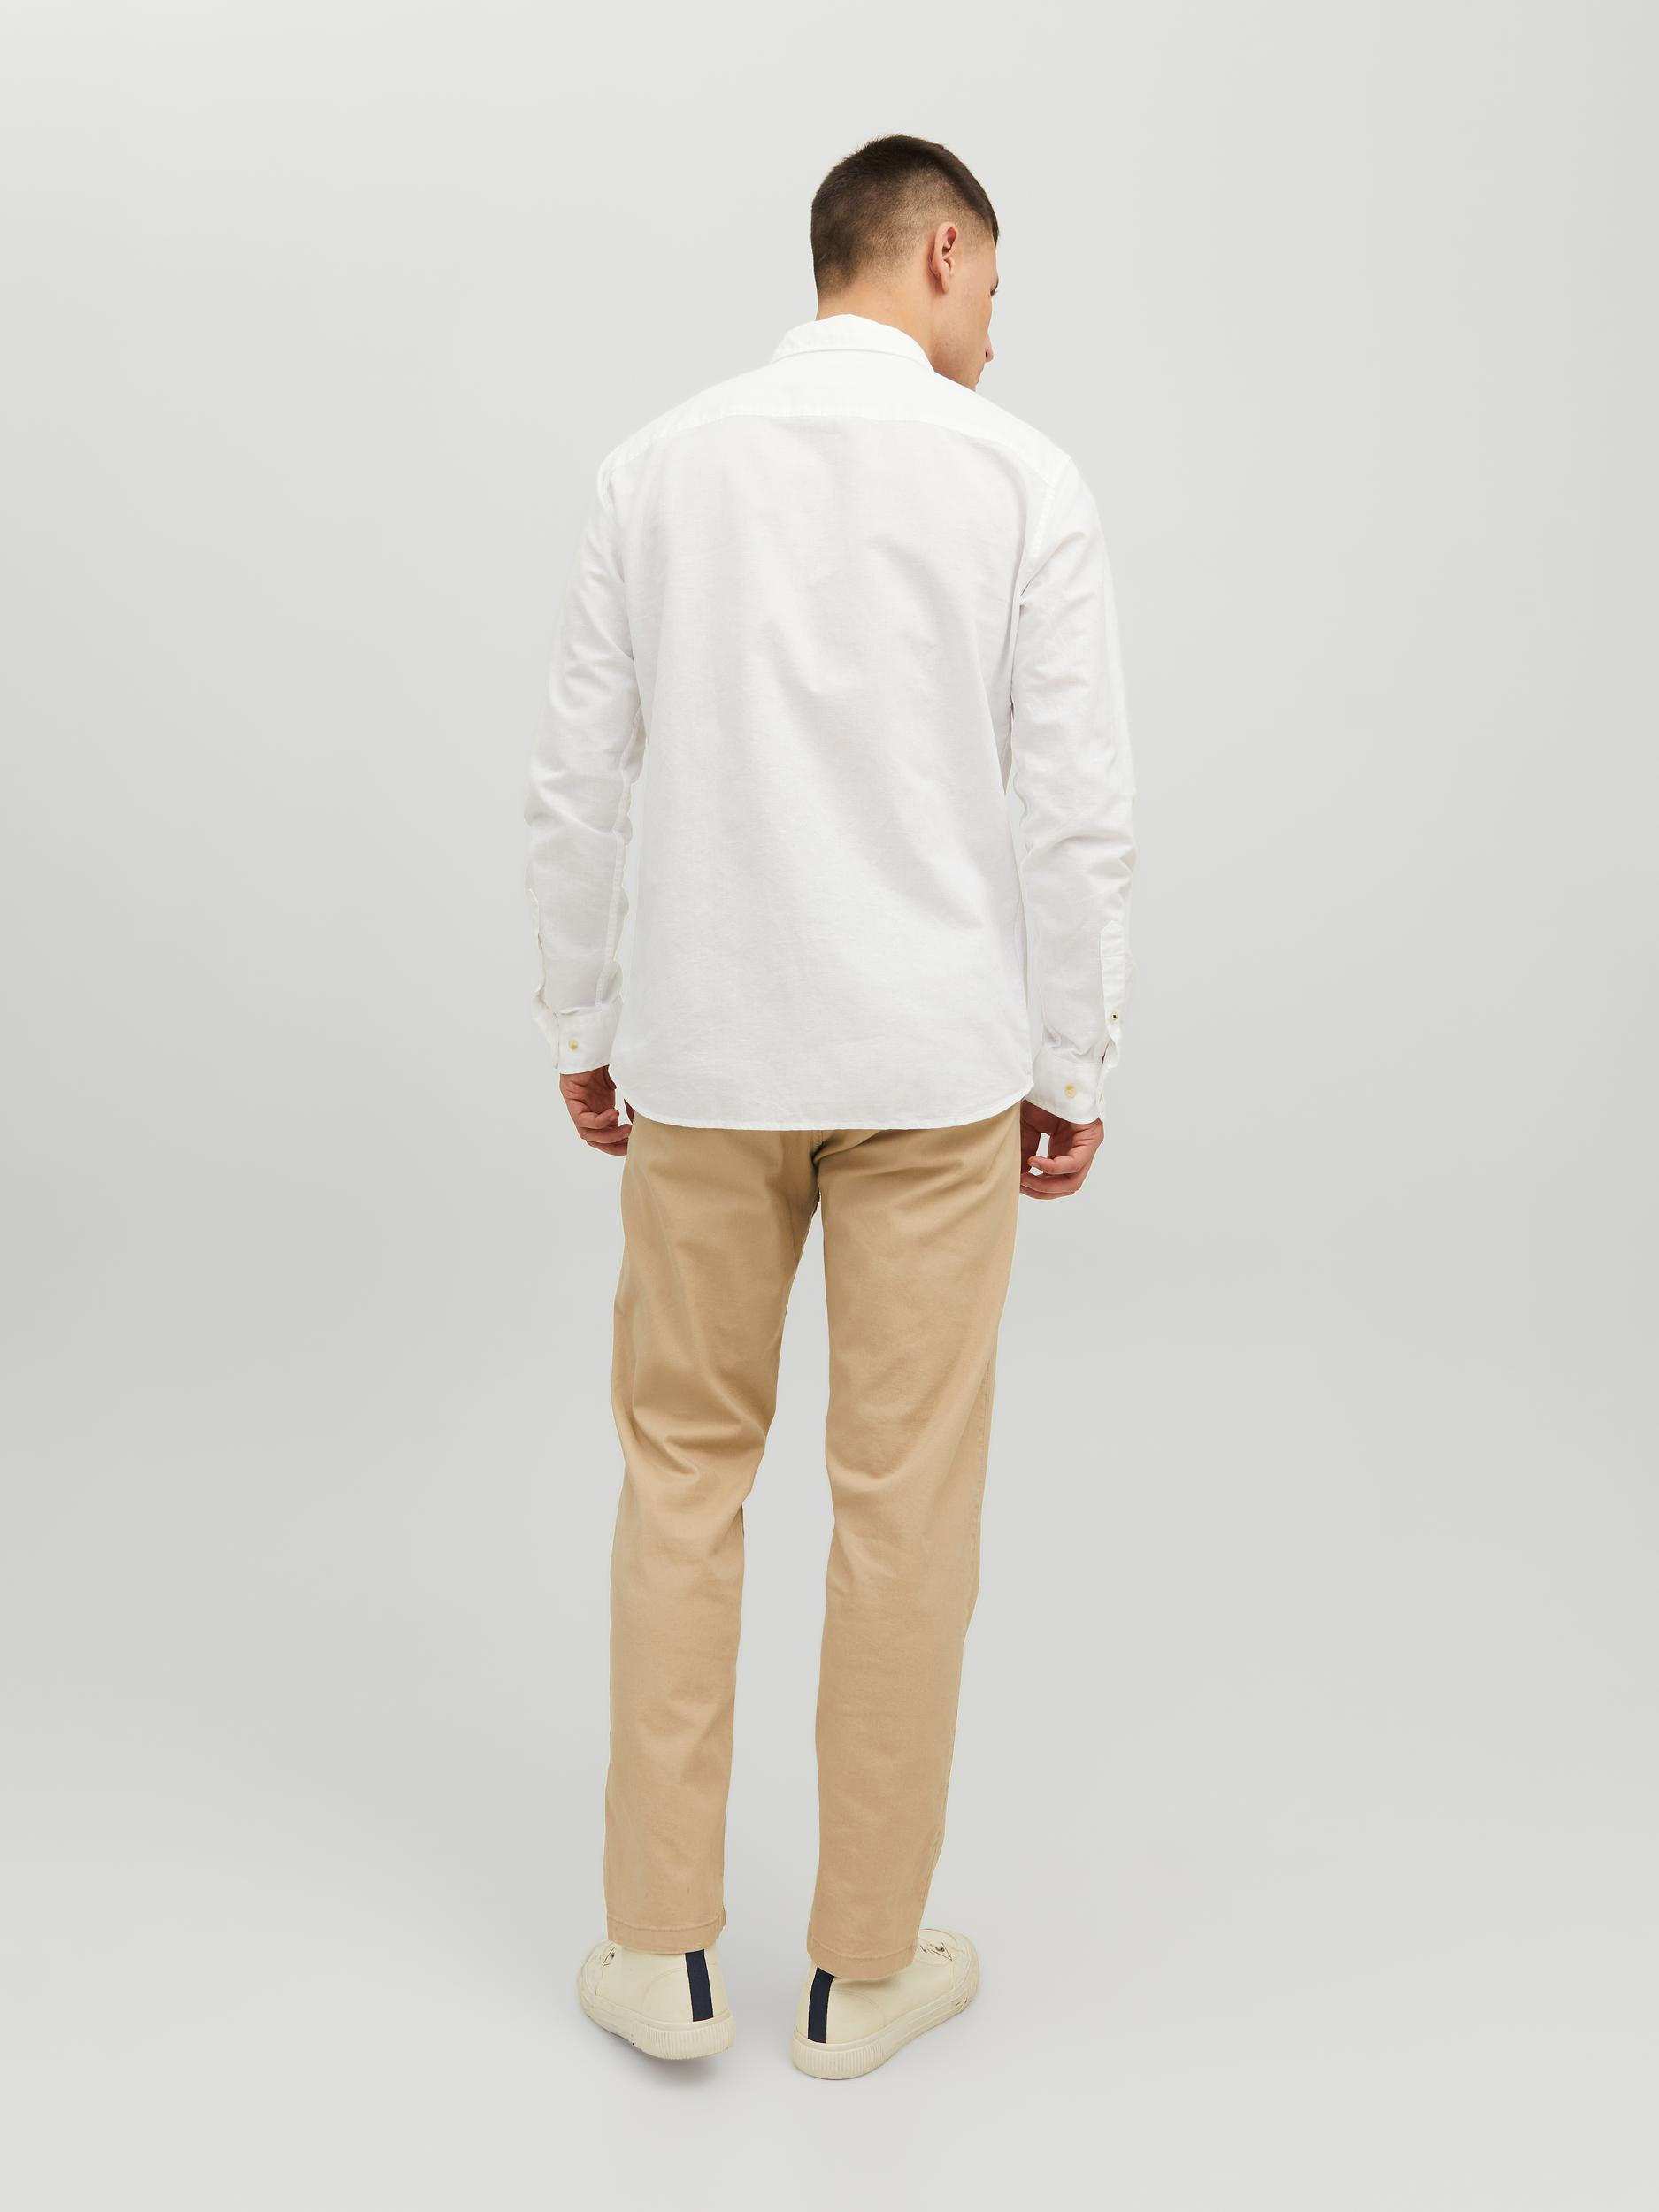 Jack & Jones - Slim fit shirt, White, large image number 2